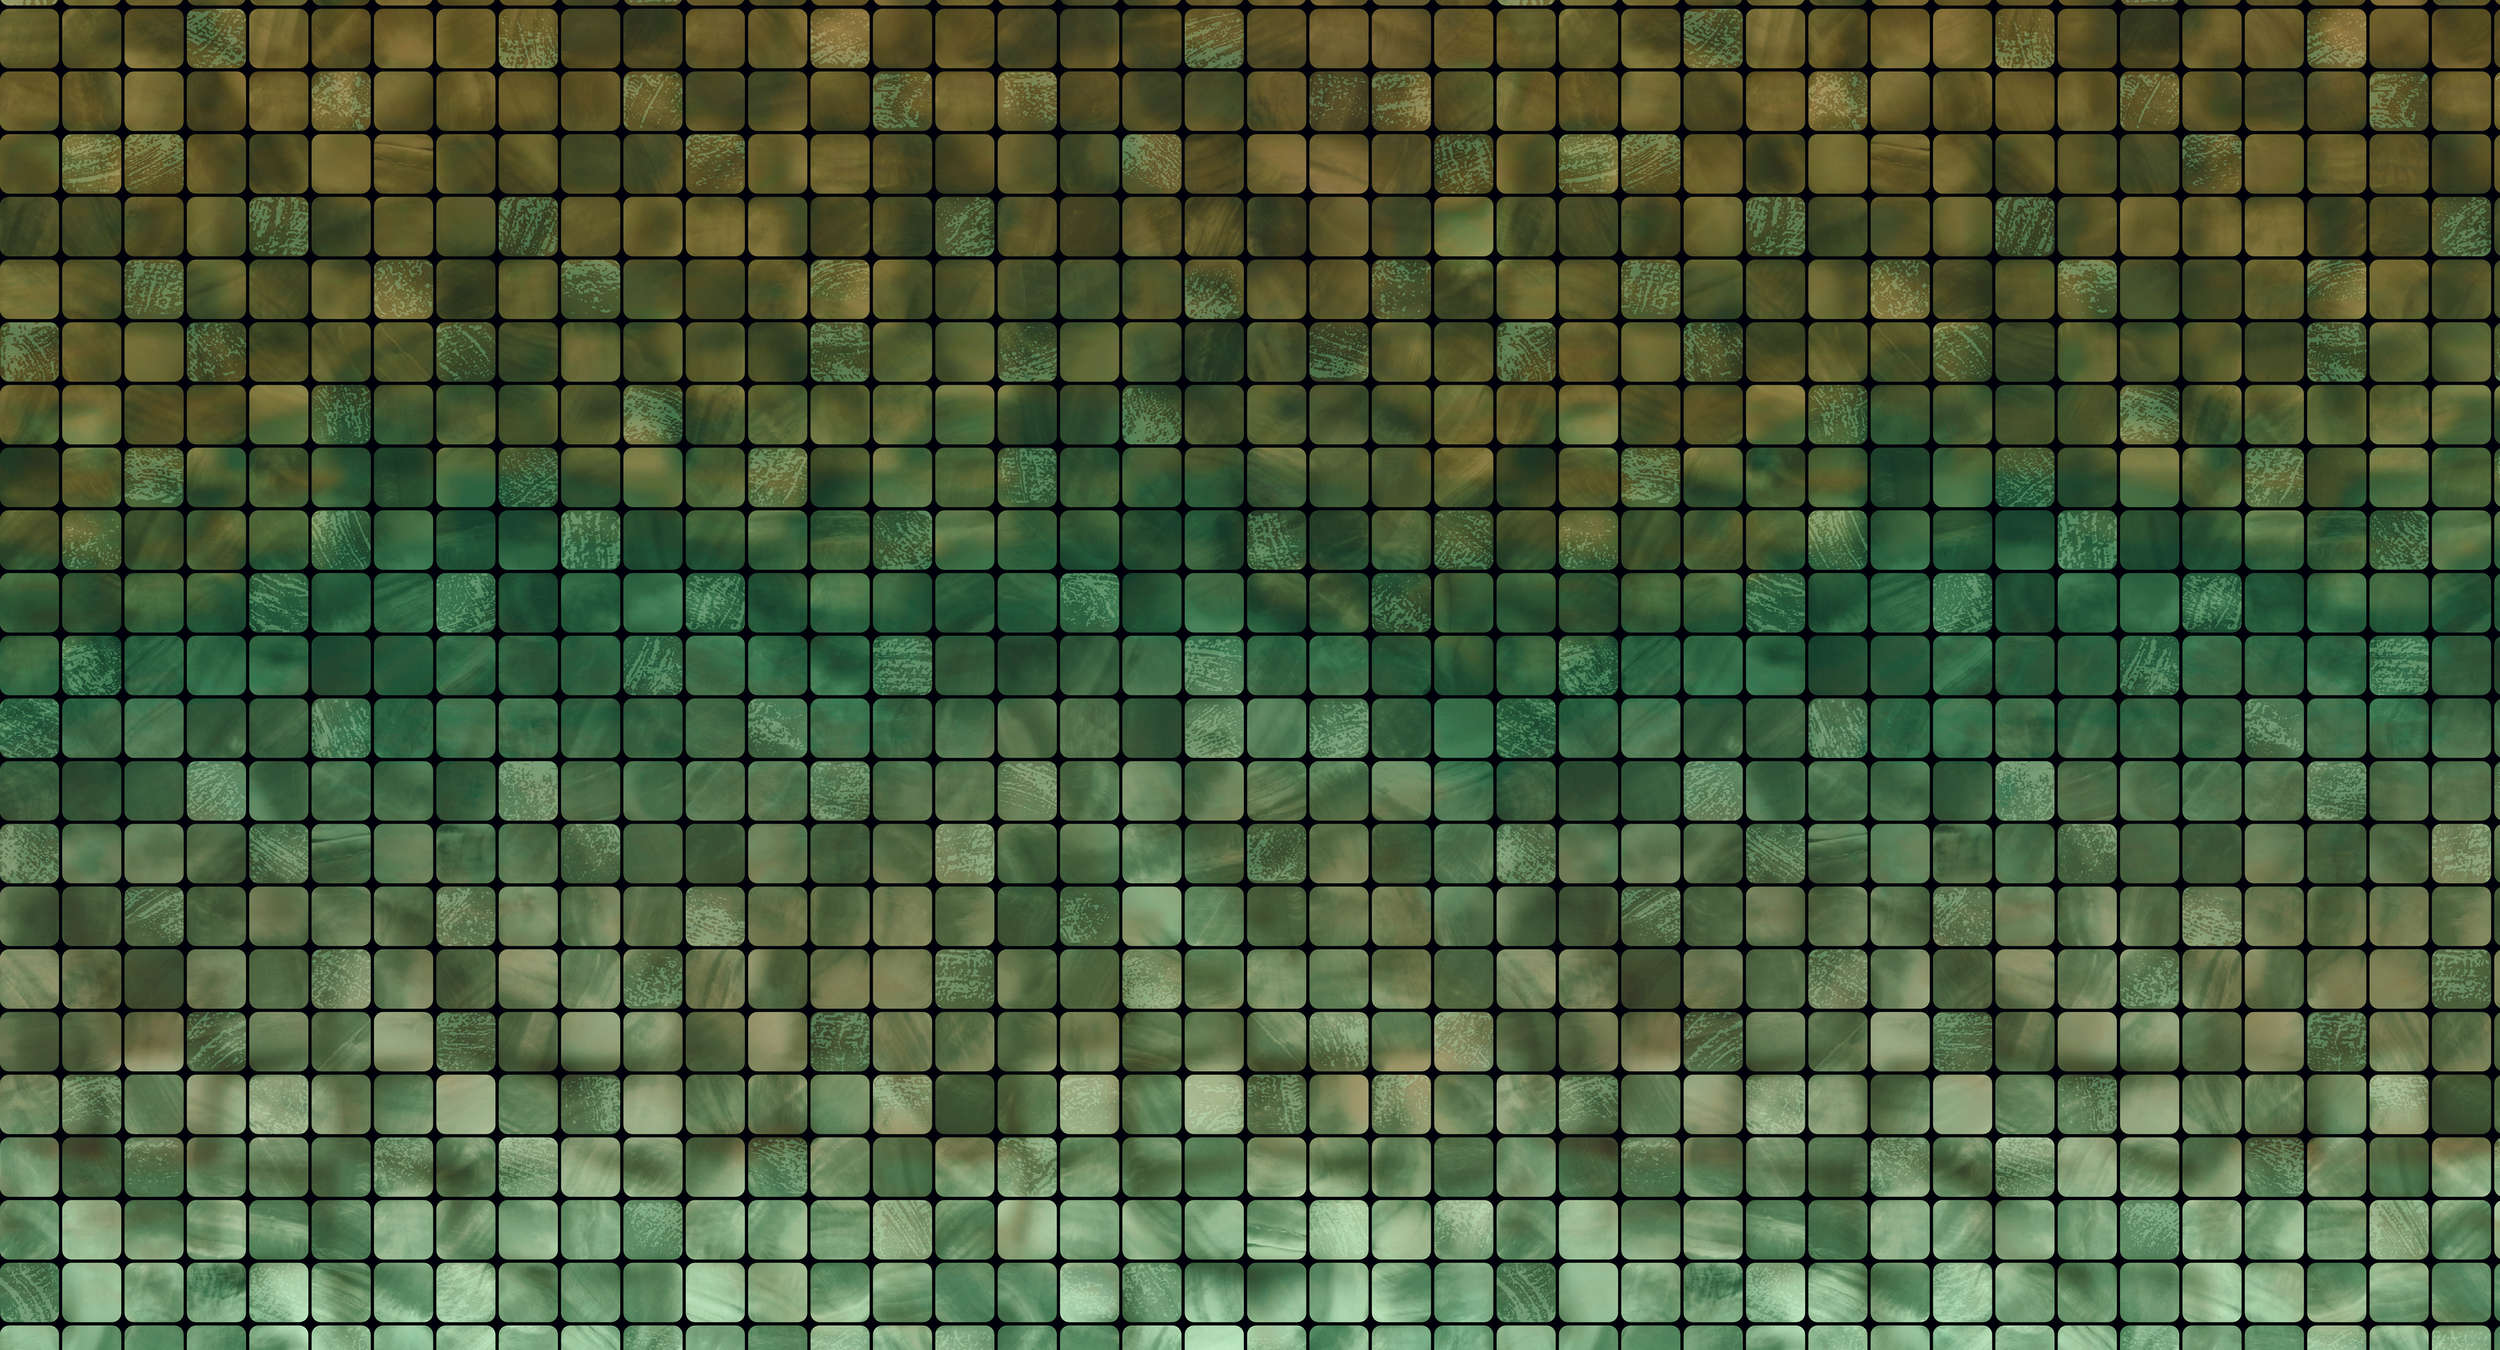             Photo wallpaper tile pattern & modern mosaic - green, cream
        